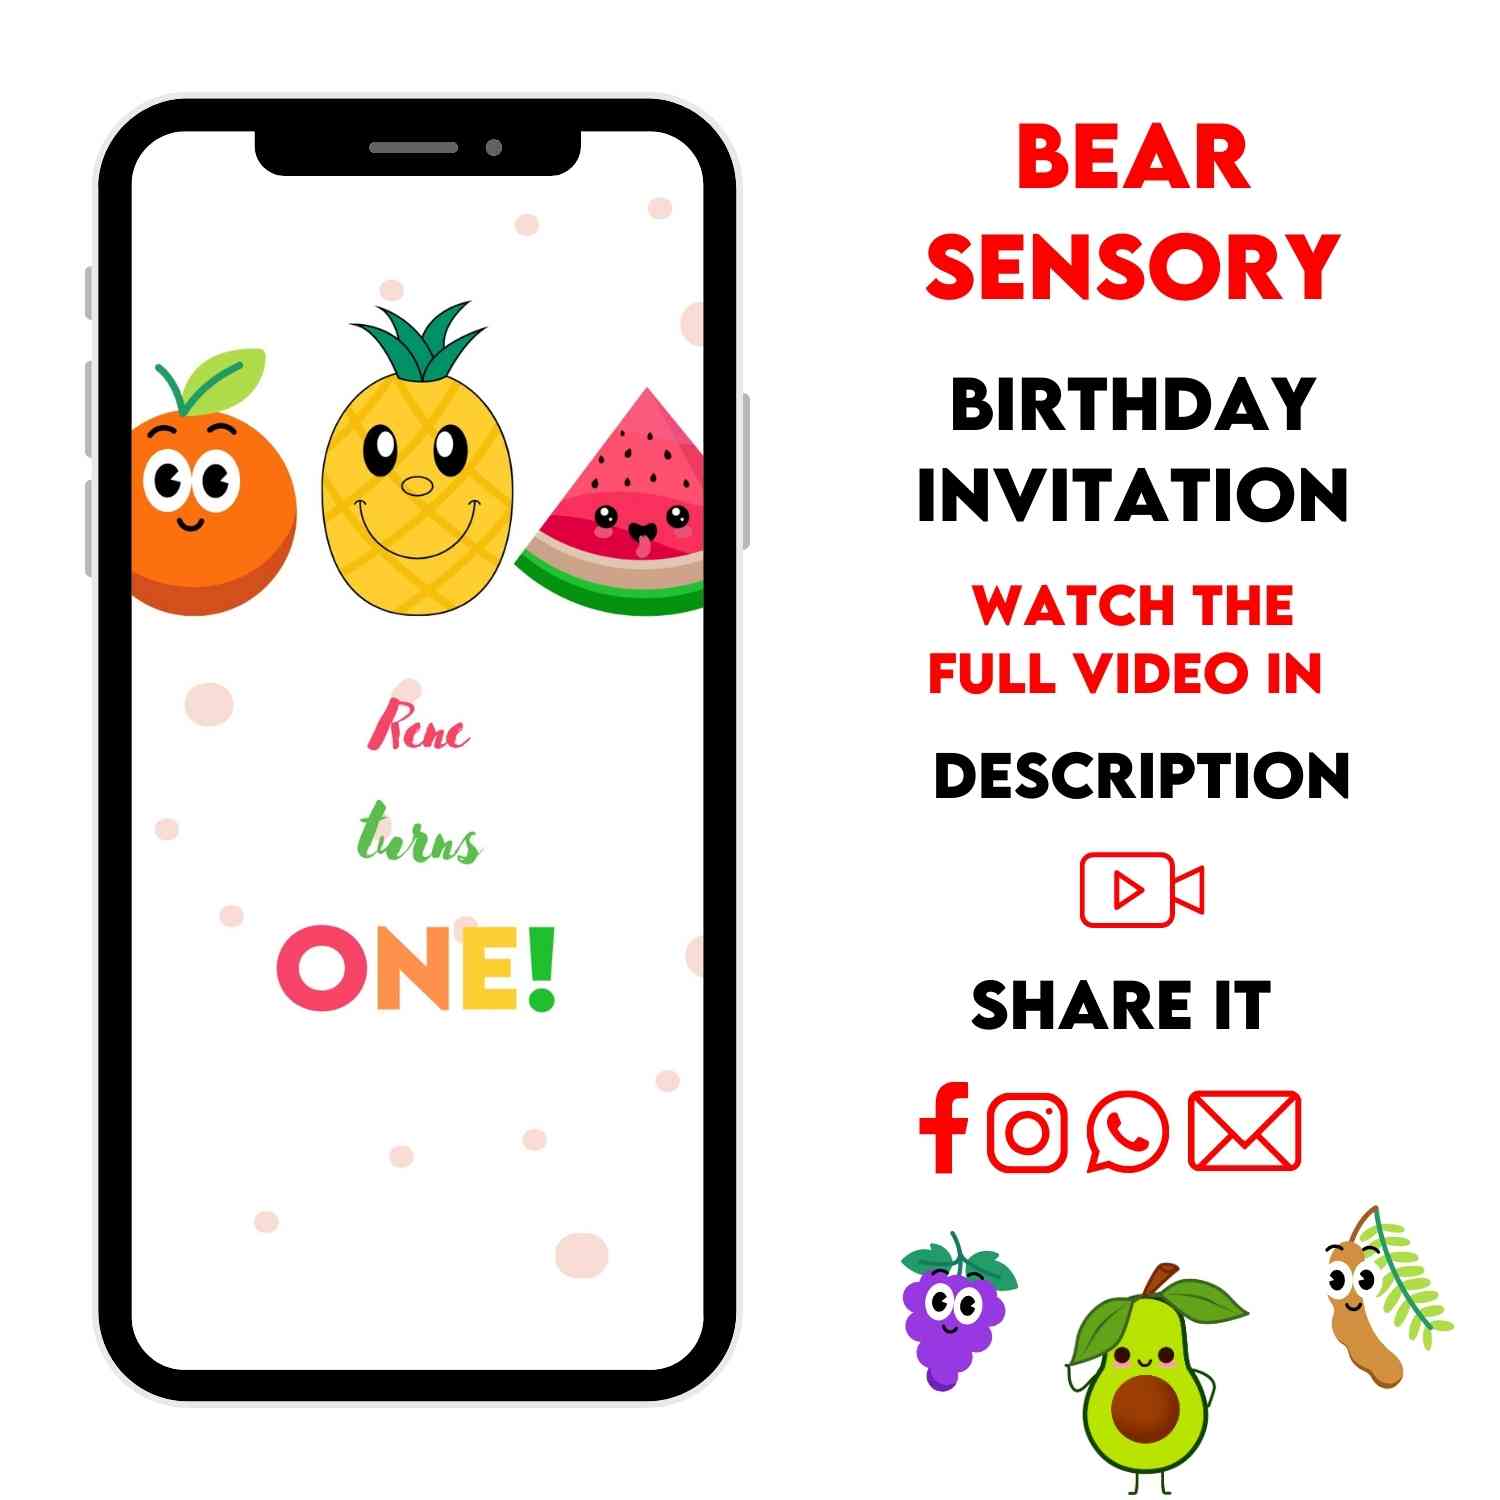 Bear Sensory Birthday Video Invitation | Fun and Interactive Celebration